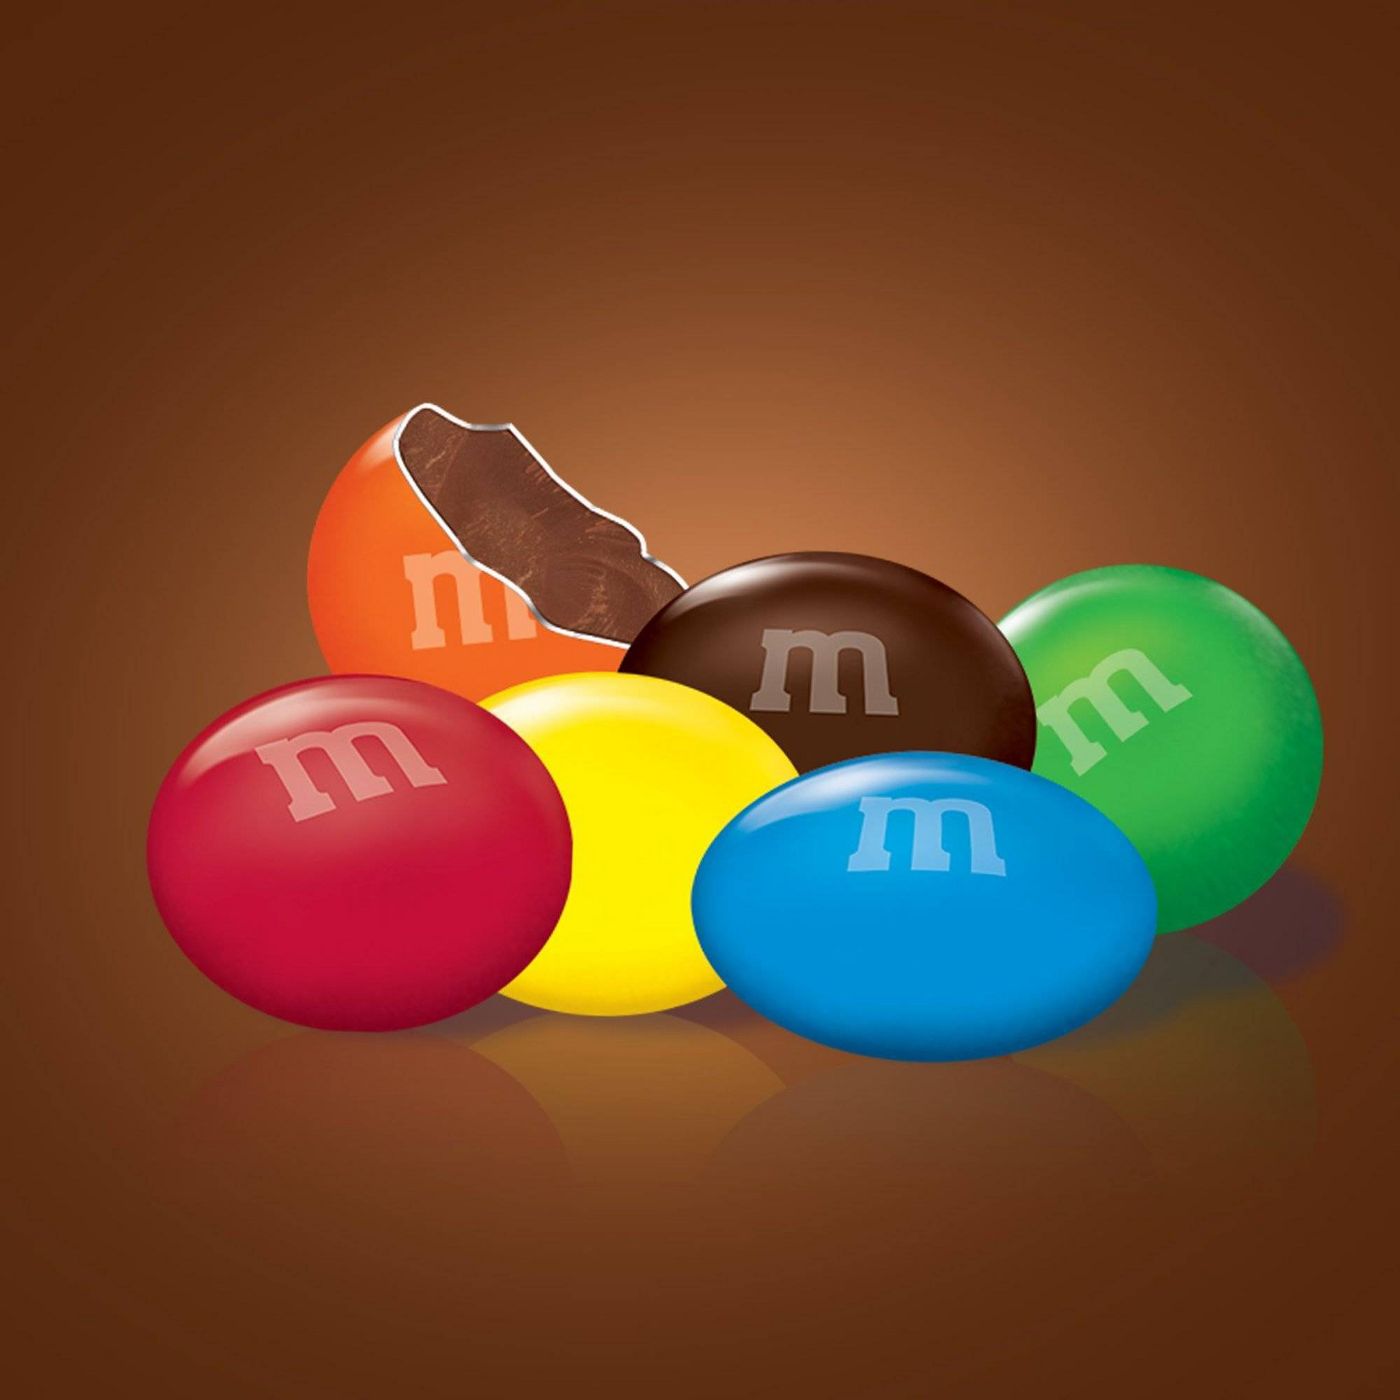 M&M's Candies Milk Chocolate Plain 10.7oz Bag